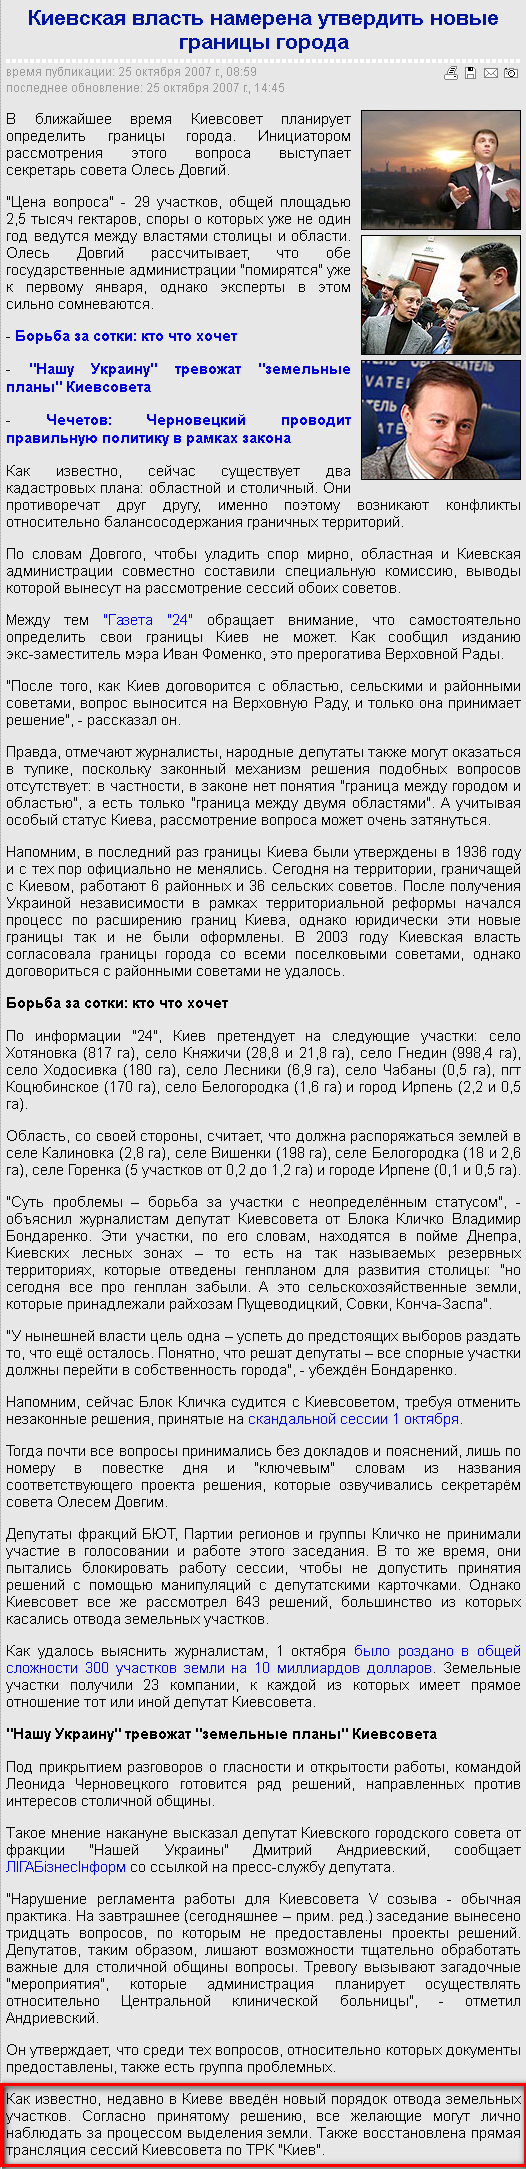 http://rus.newsru.ua/ukraine/25oct2007/kordon.html